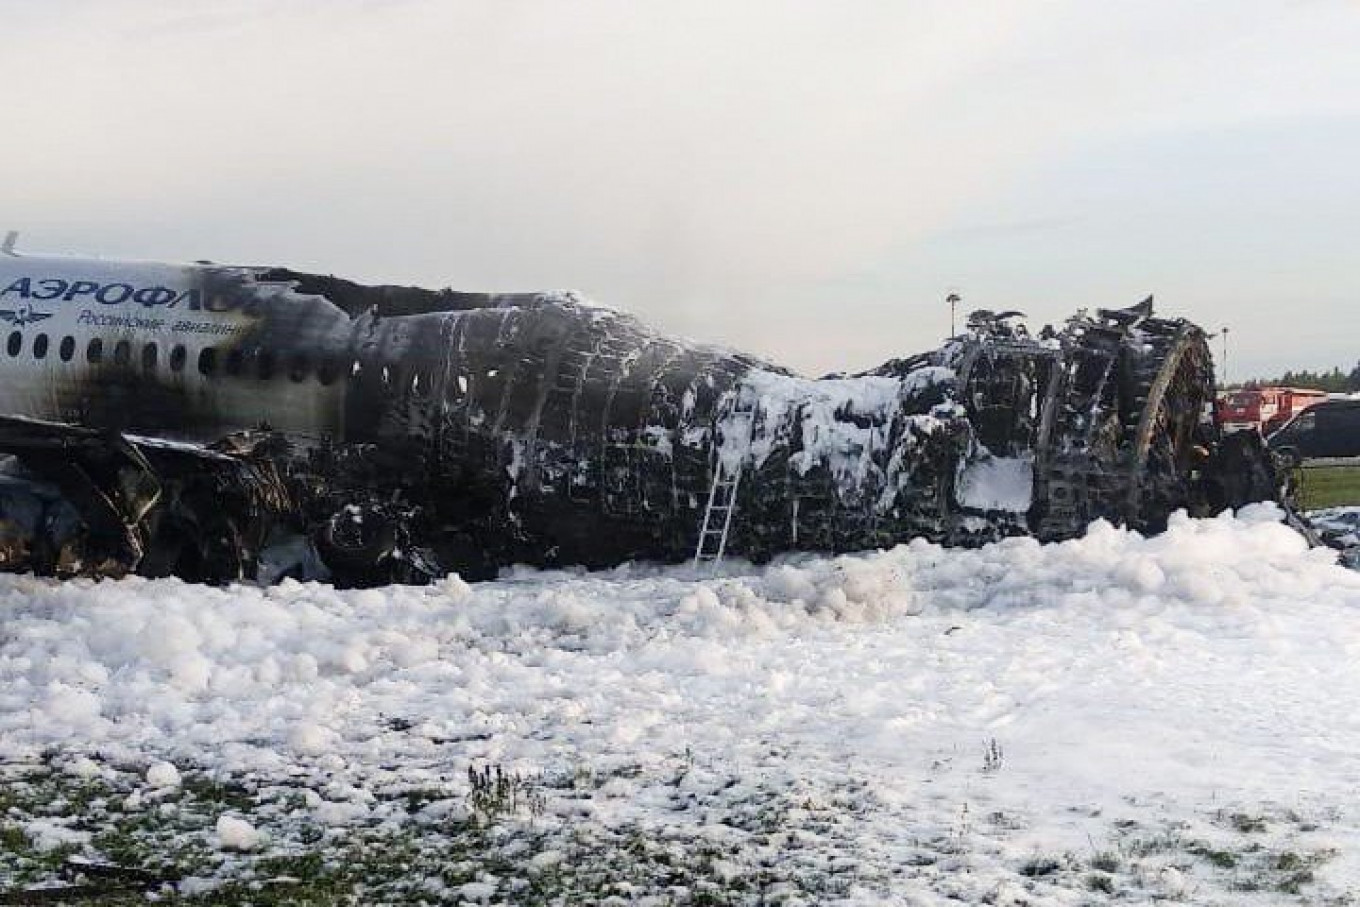 What We Know About the Deadly Aeroflot Superjet Crash Landing